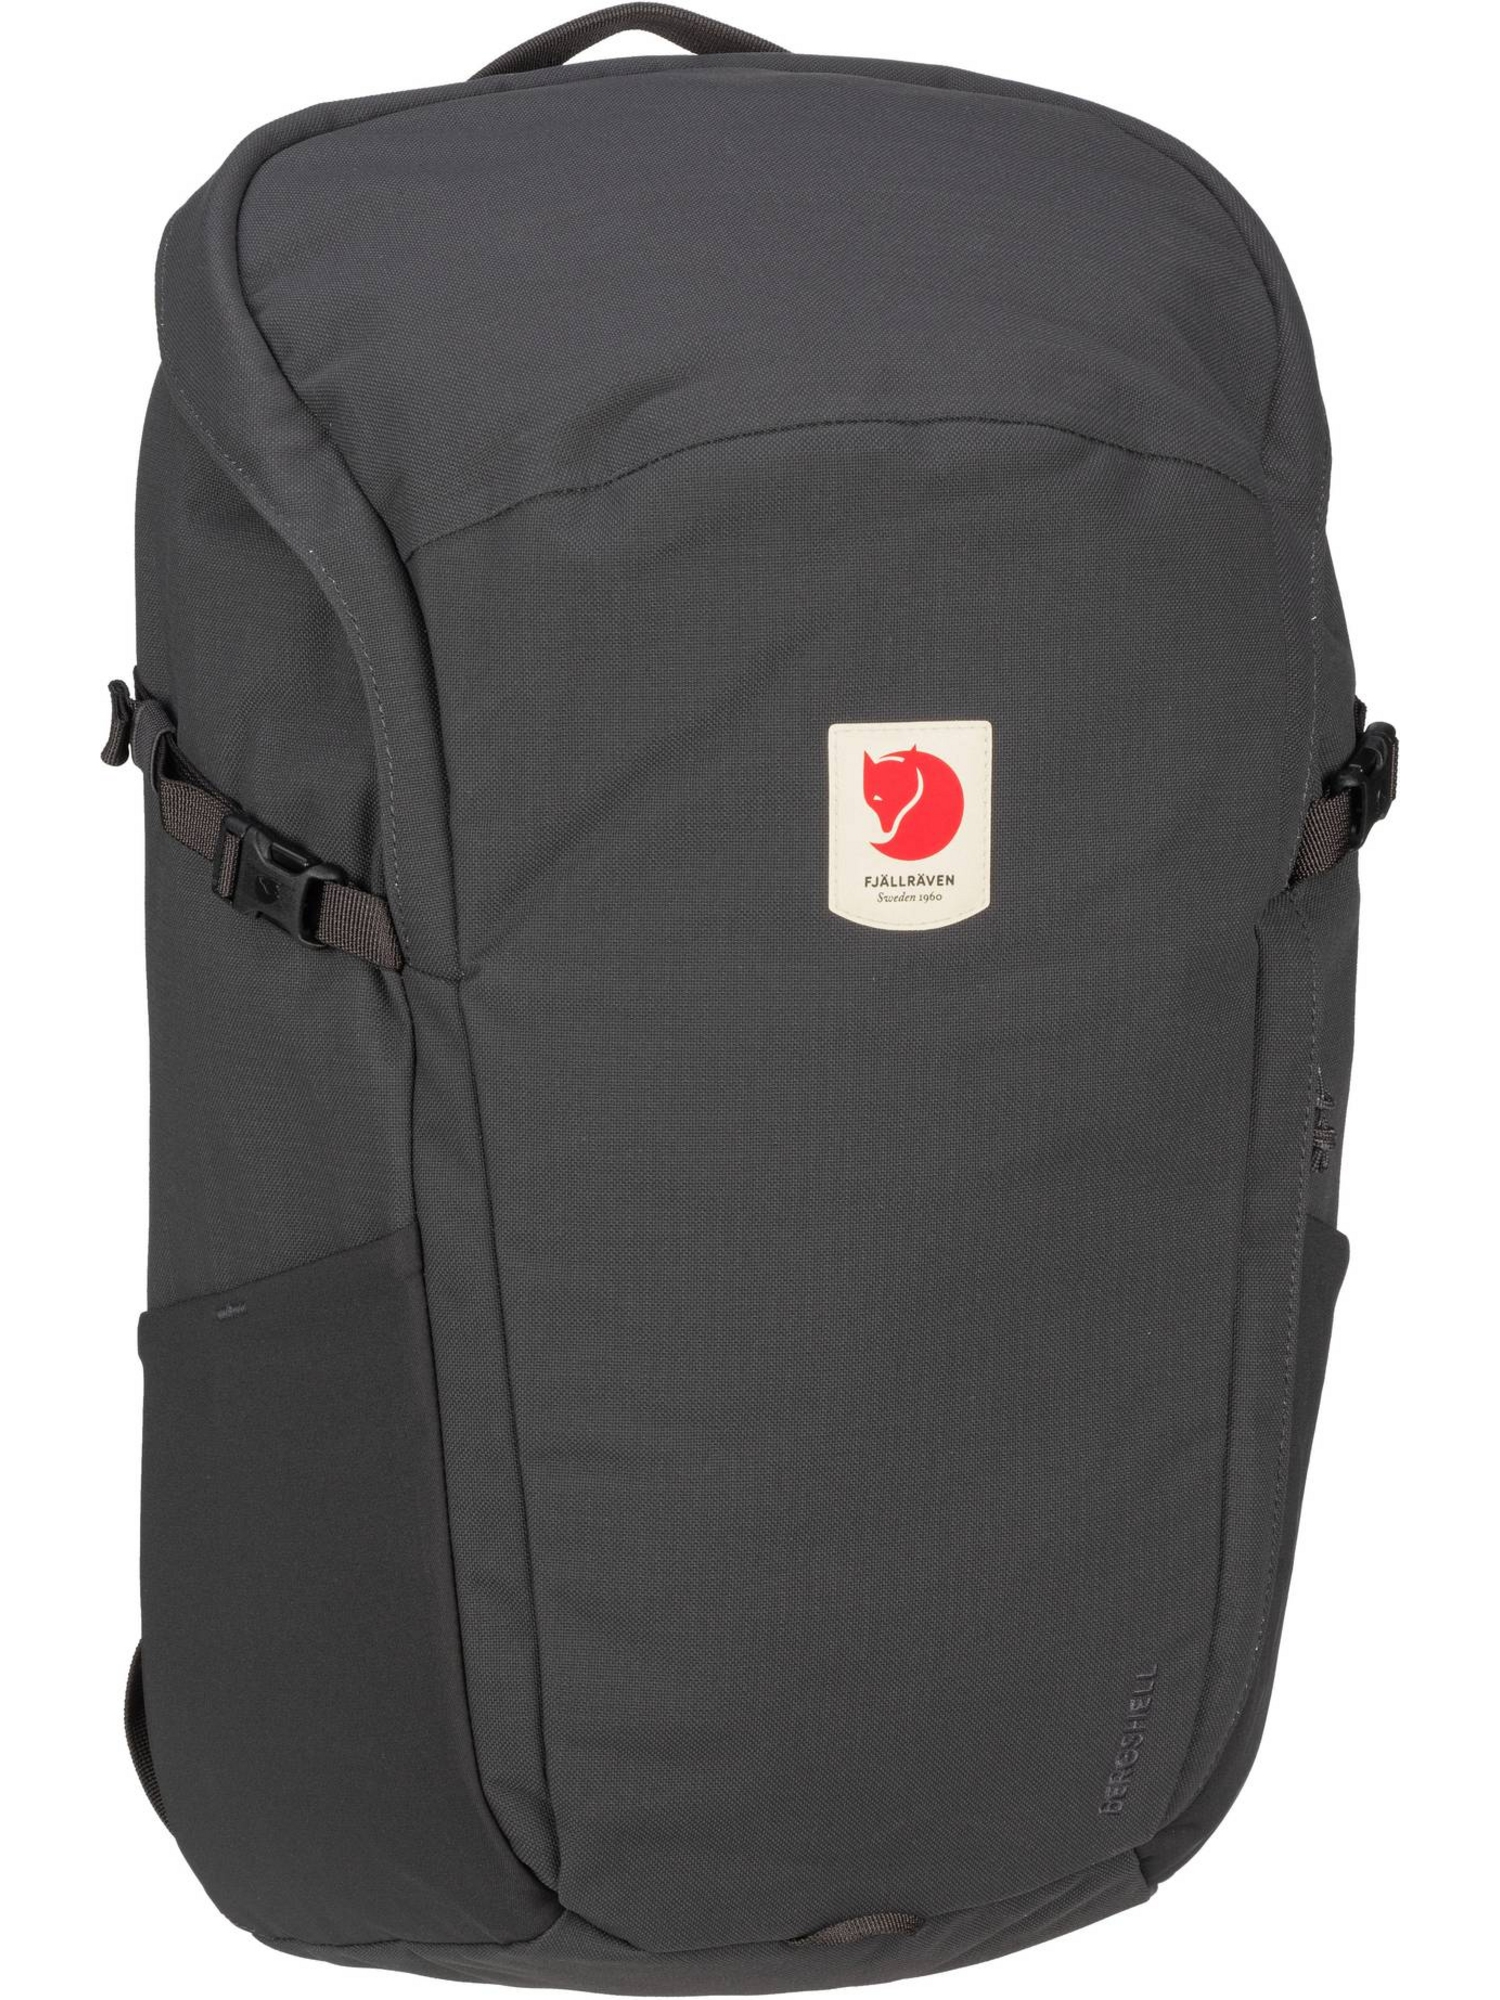 Рюкзак FJÄLLRÄVEN/Backpack Ulvö 23, темно серый сумка рюкзак ulvö среднего размера fjällräven темно серый